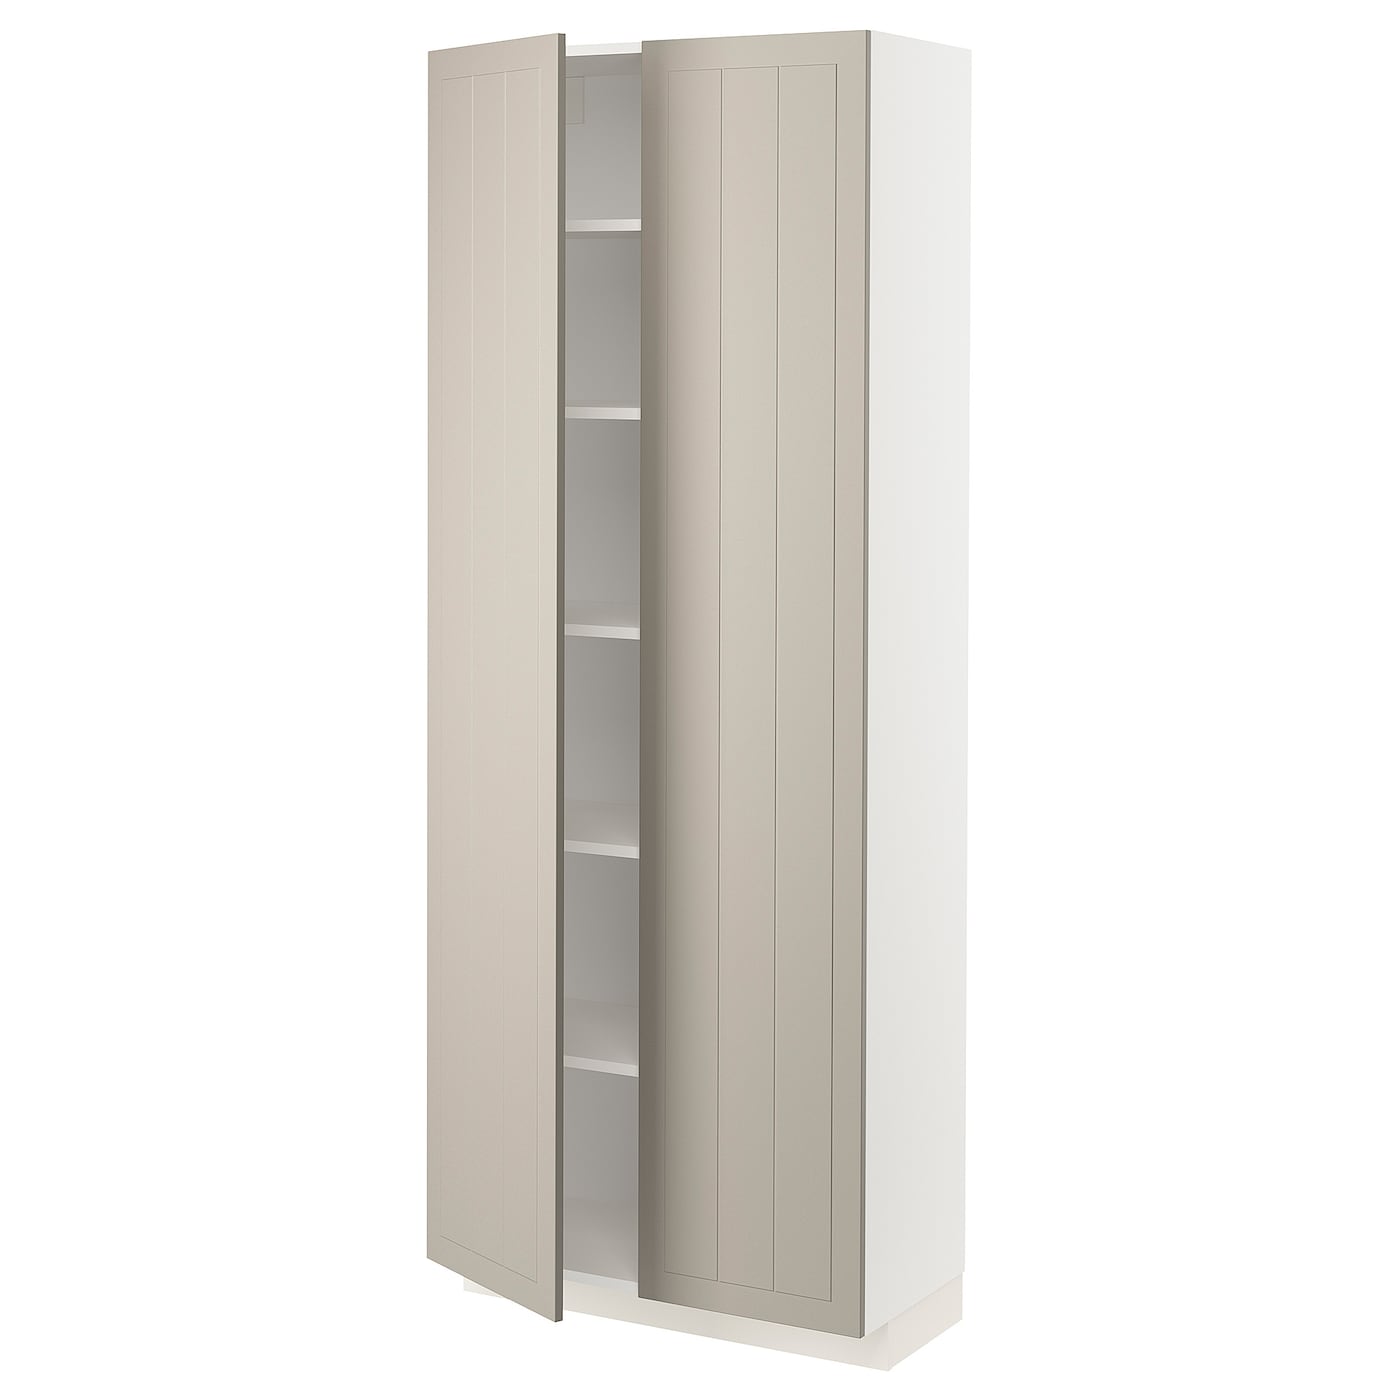 Высокий кухонный шкаф с полками - IKEA METOD/МЕТОД ИКЕА, 200х37х80 см, белый/бежевый